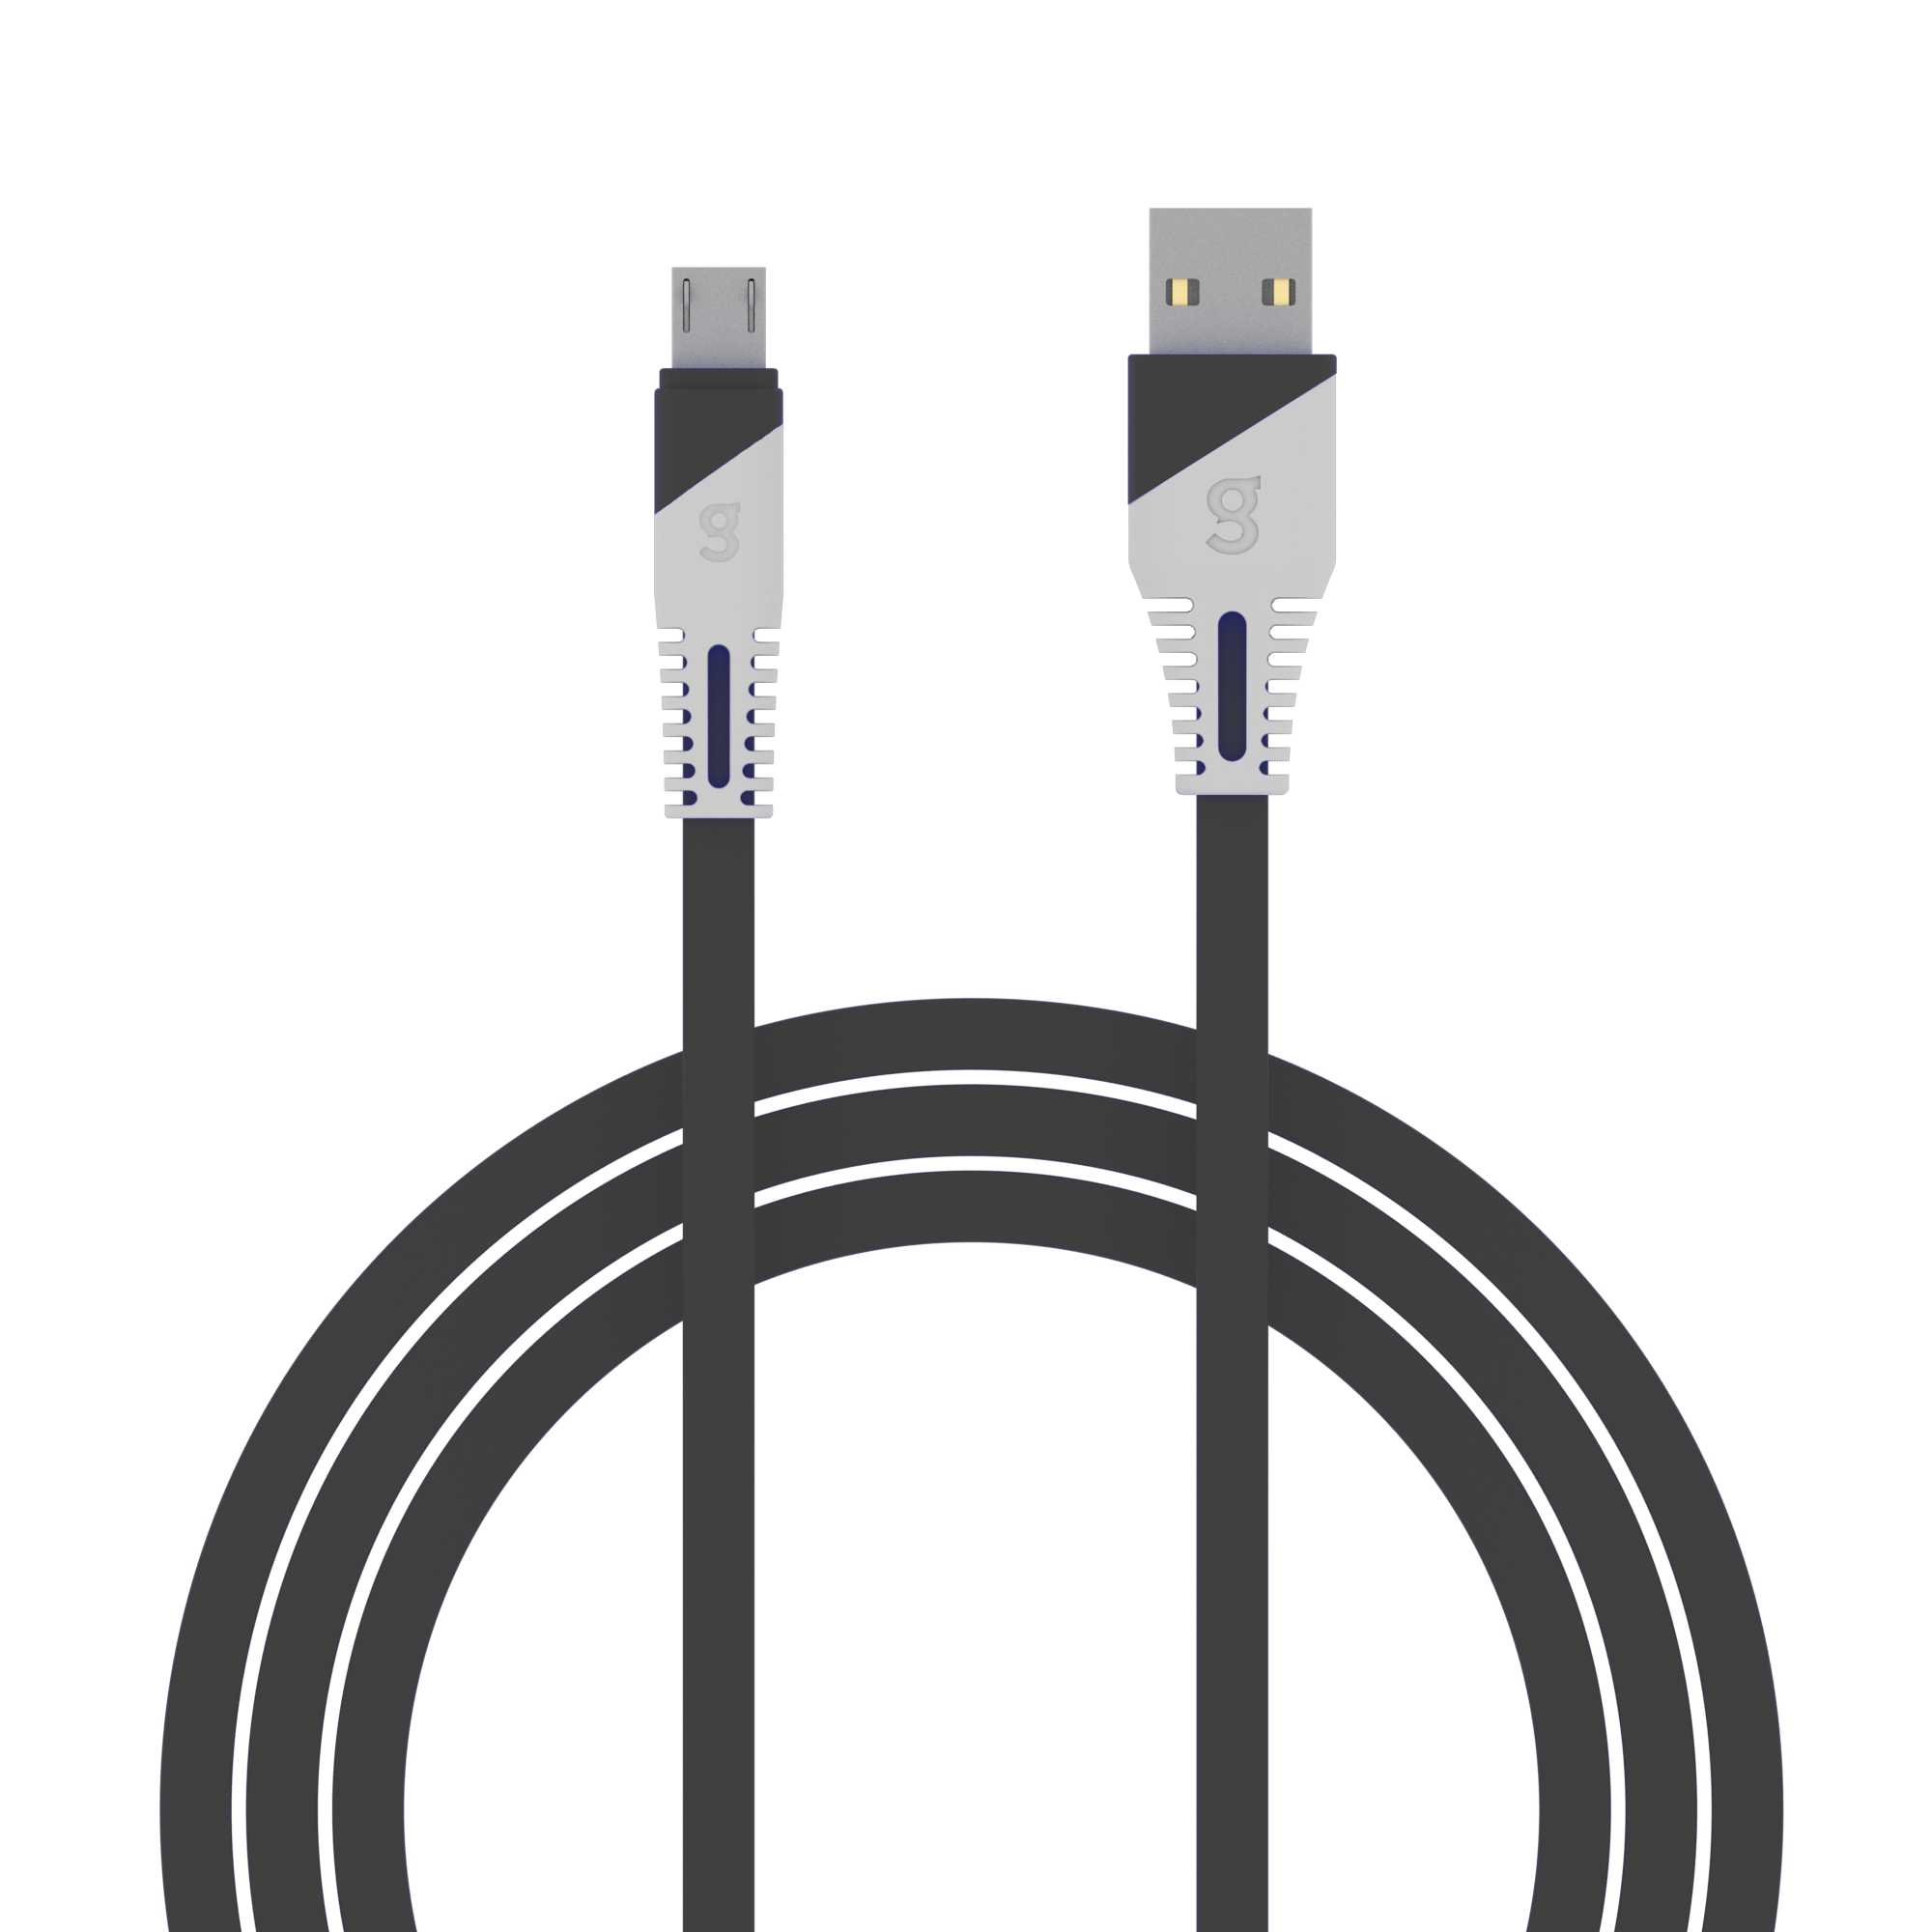 Cable USB a Micro USB - Carga rápida - 3 Metros – gowin